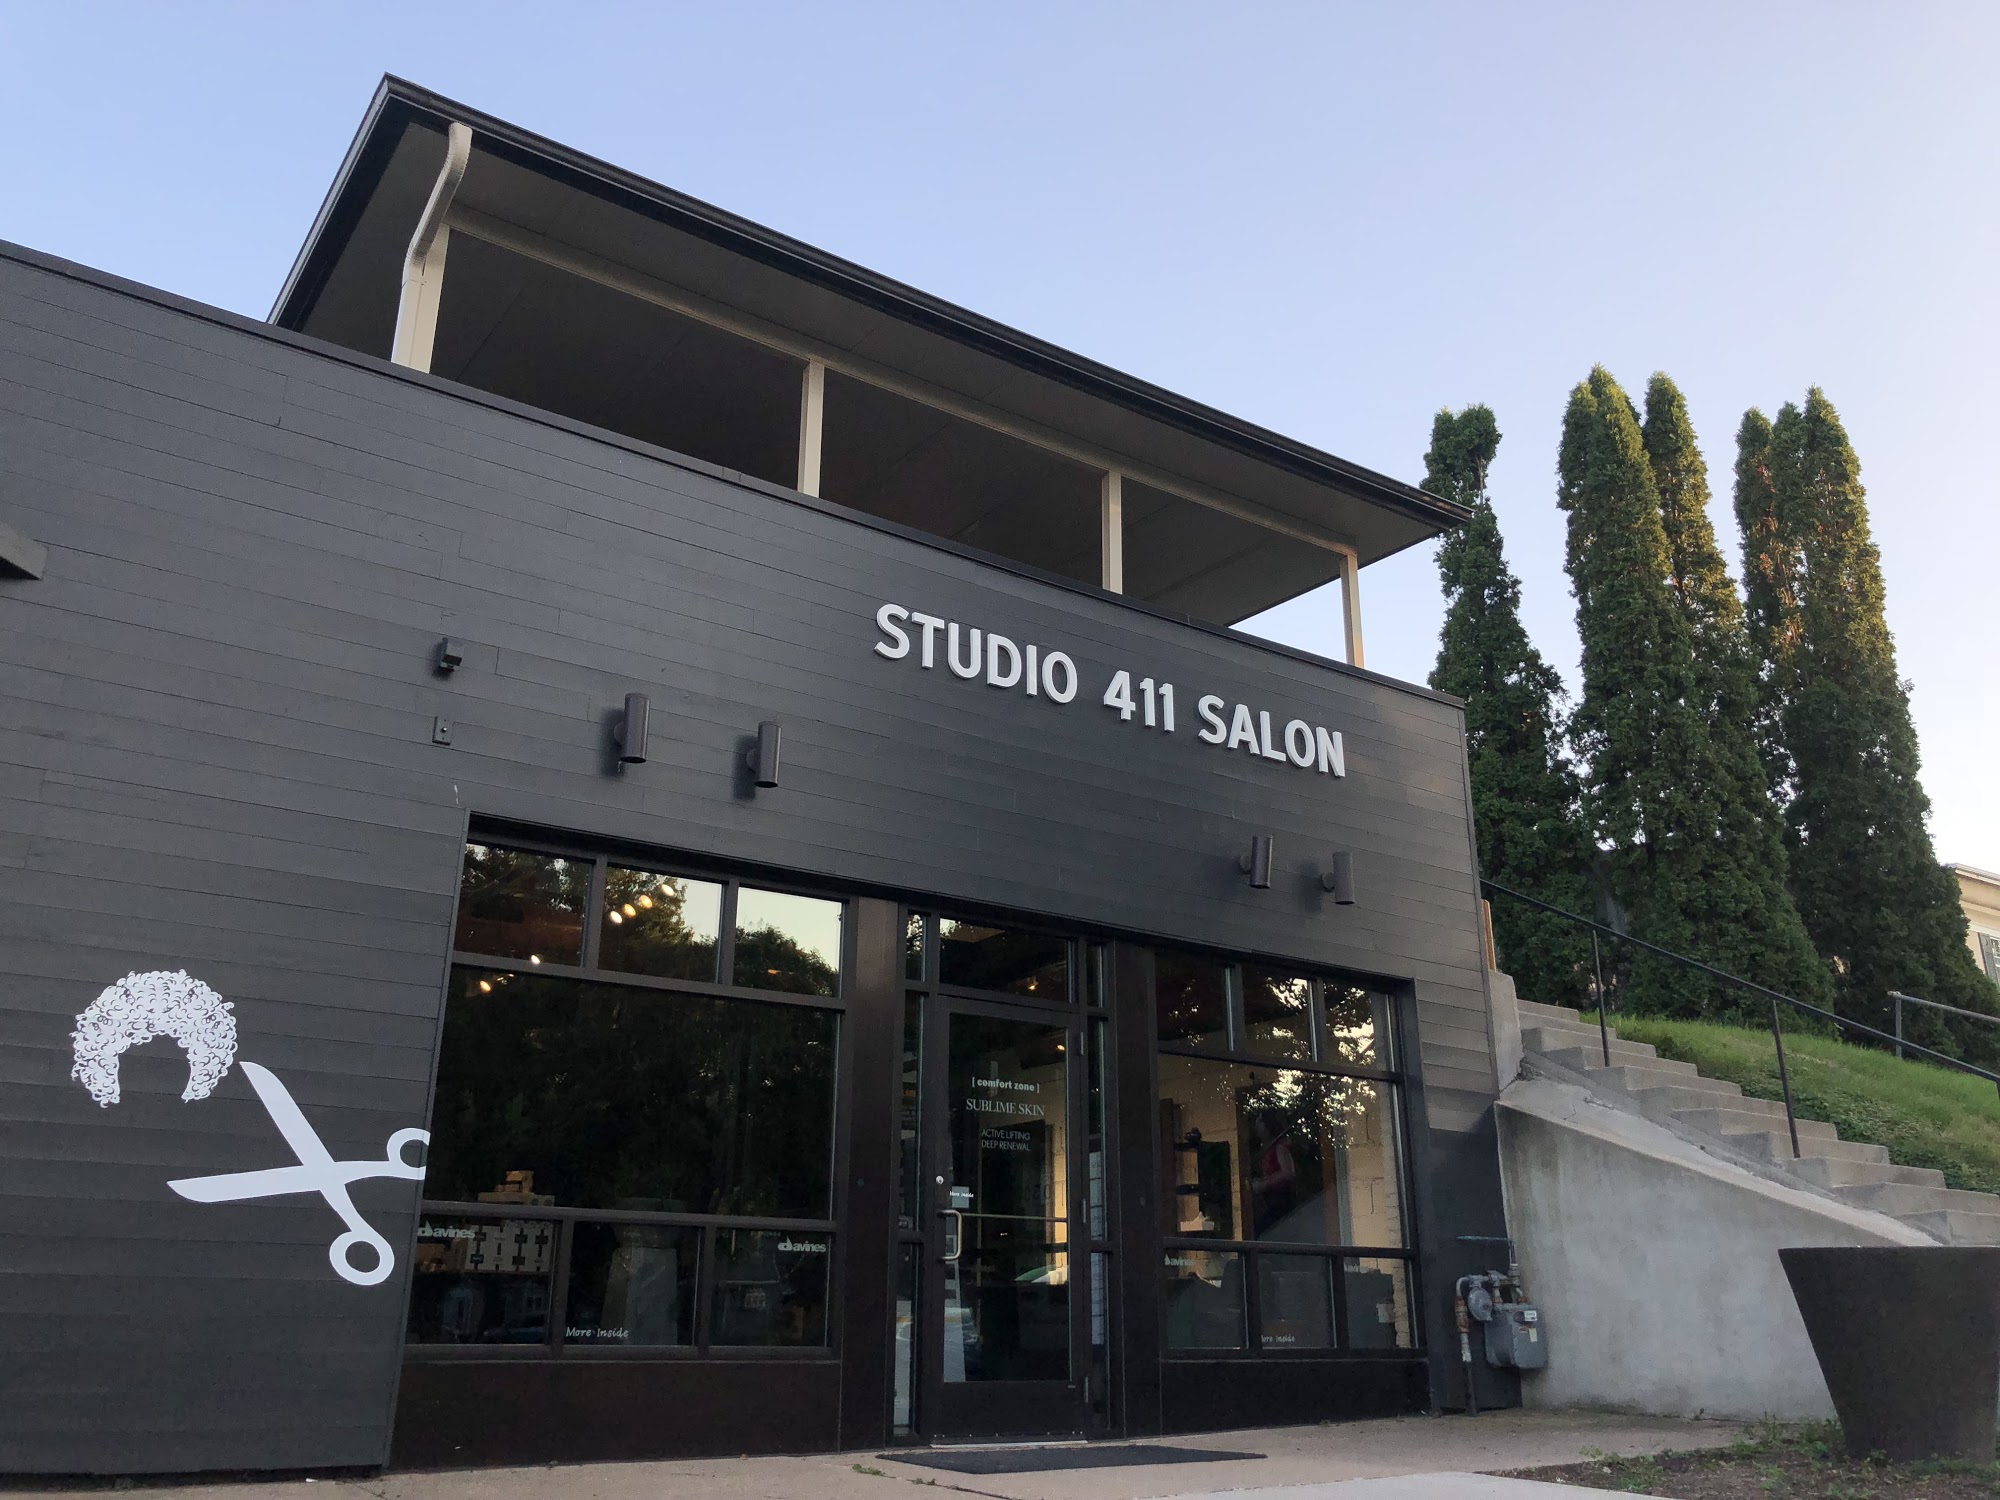 Studio 411 Salon